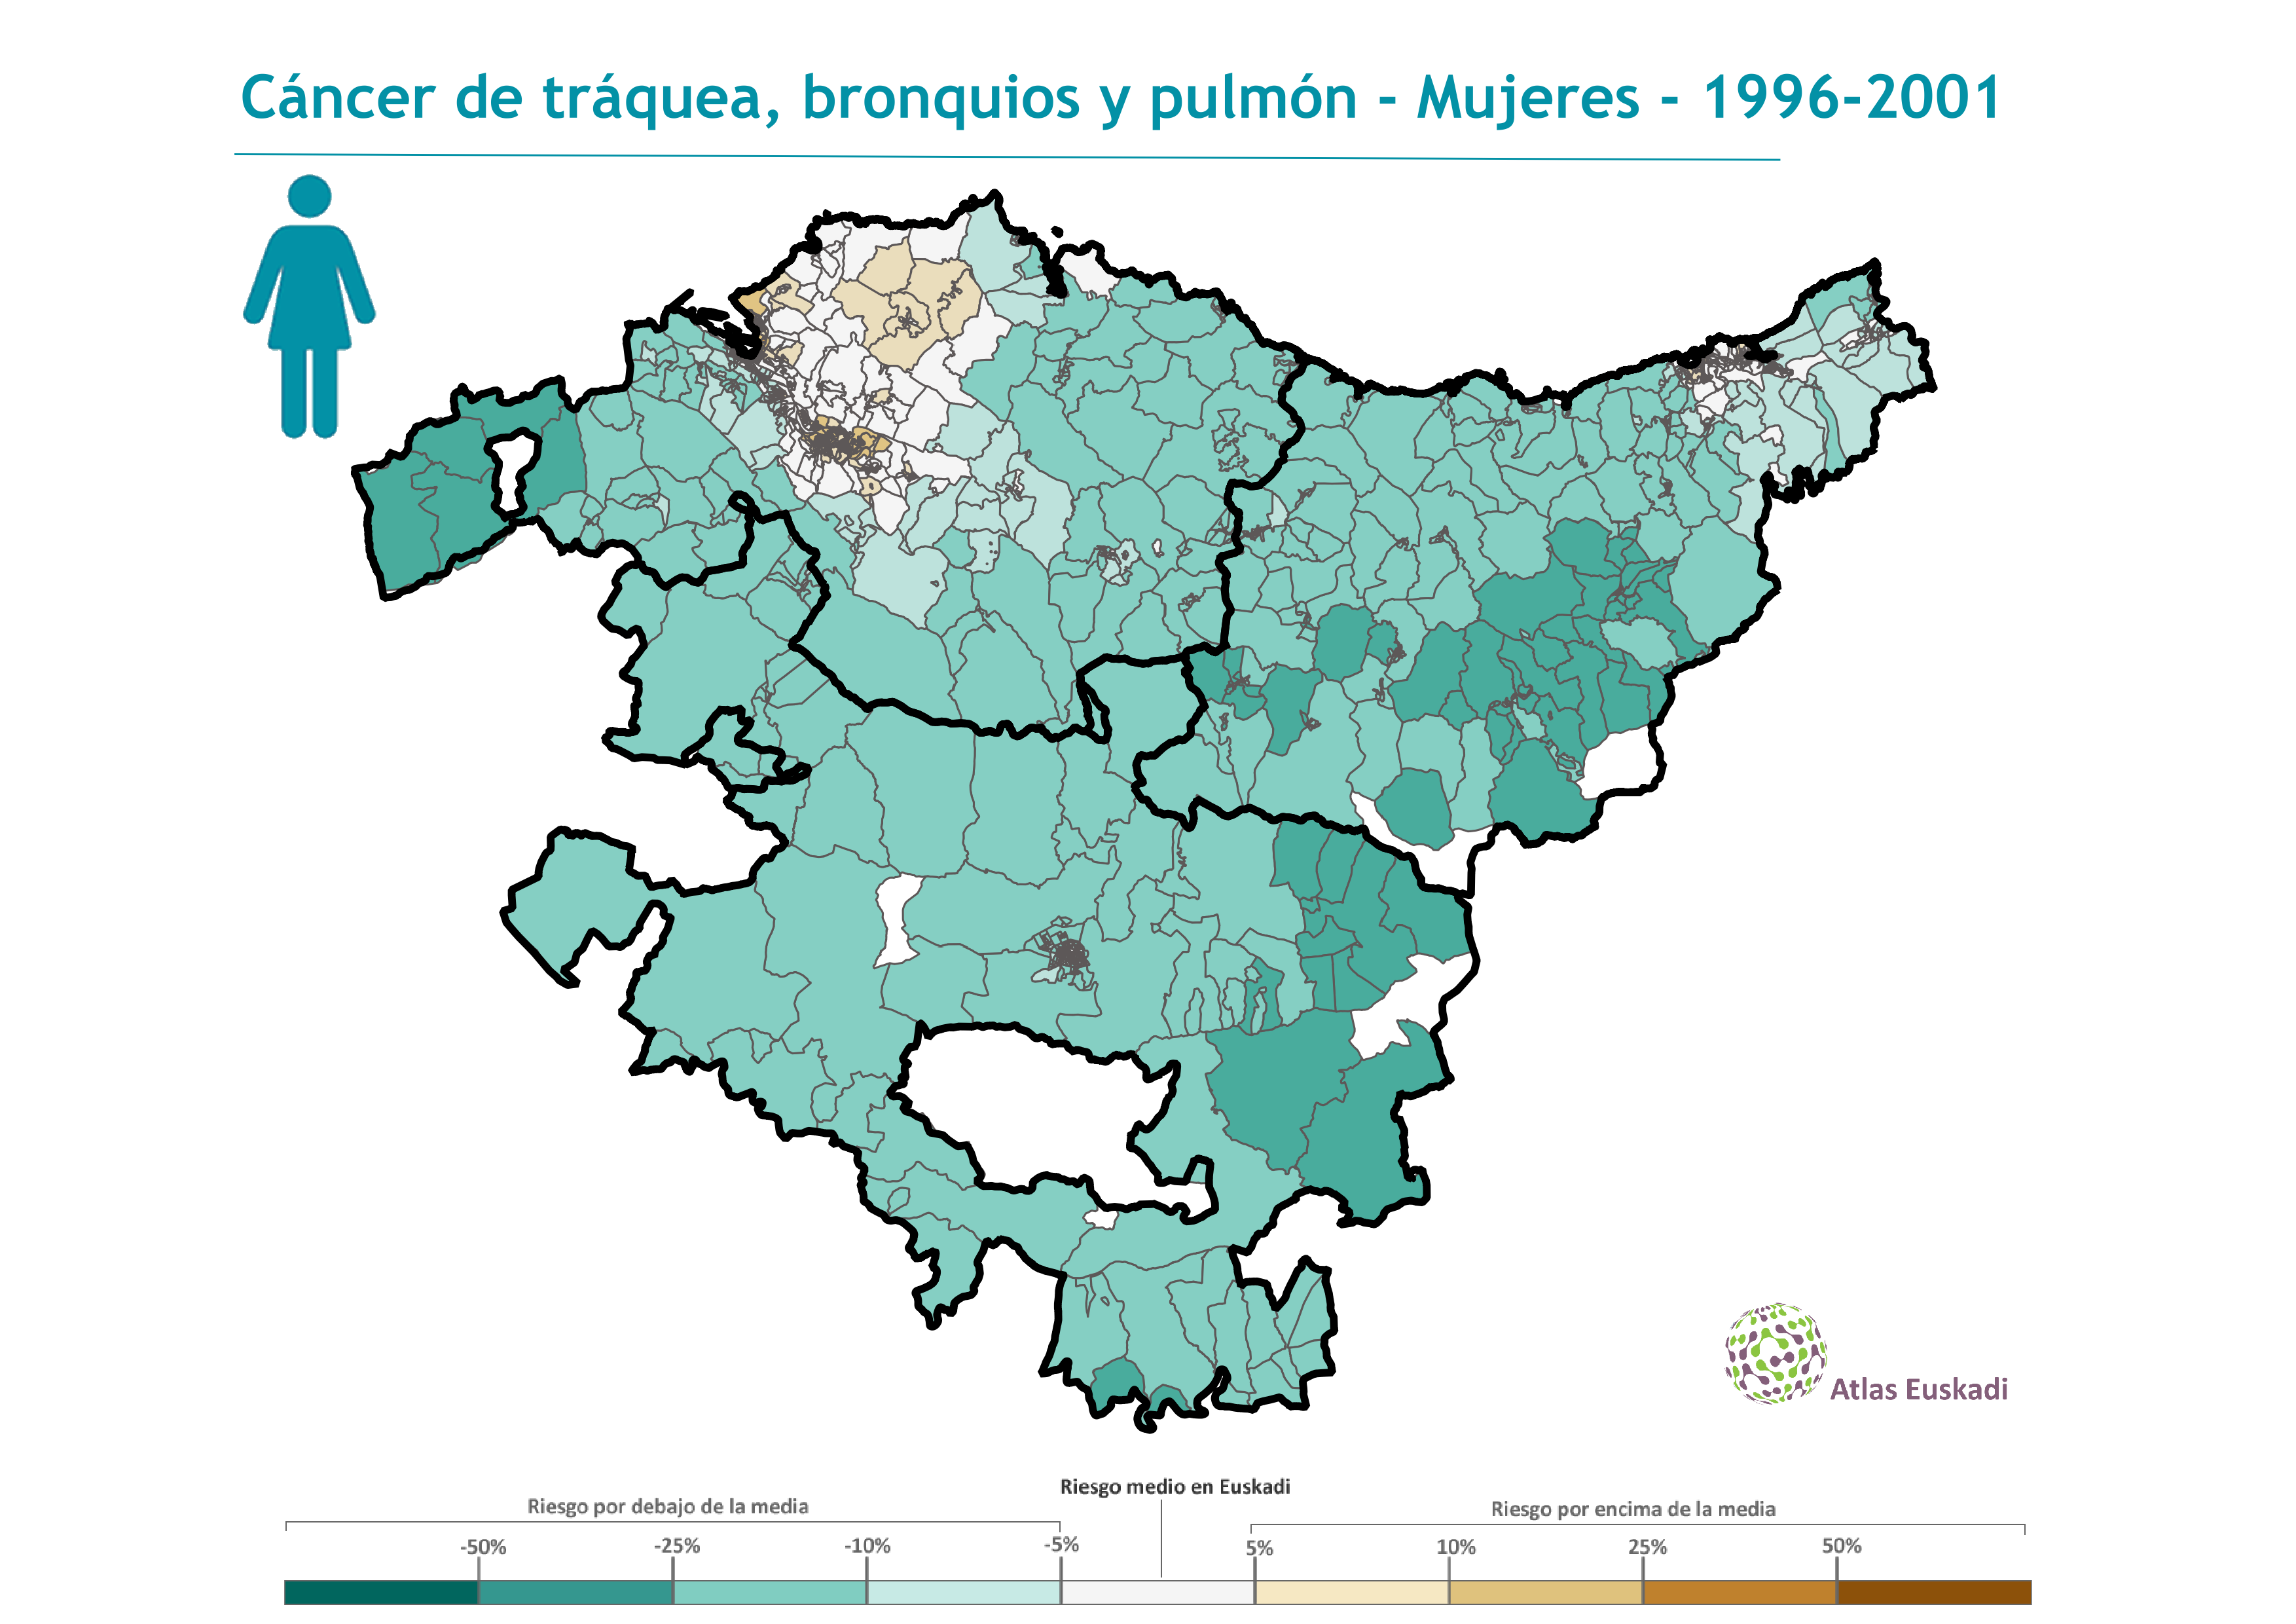 Cáncer de tráquea, bronquios y pulmón mujeres  1996-2001 Euskadi